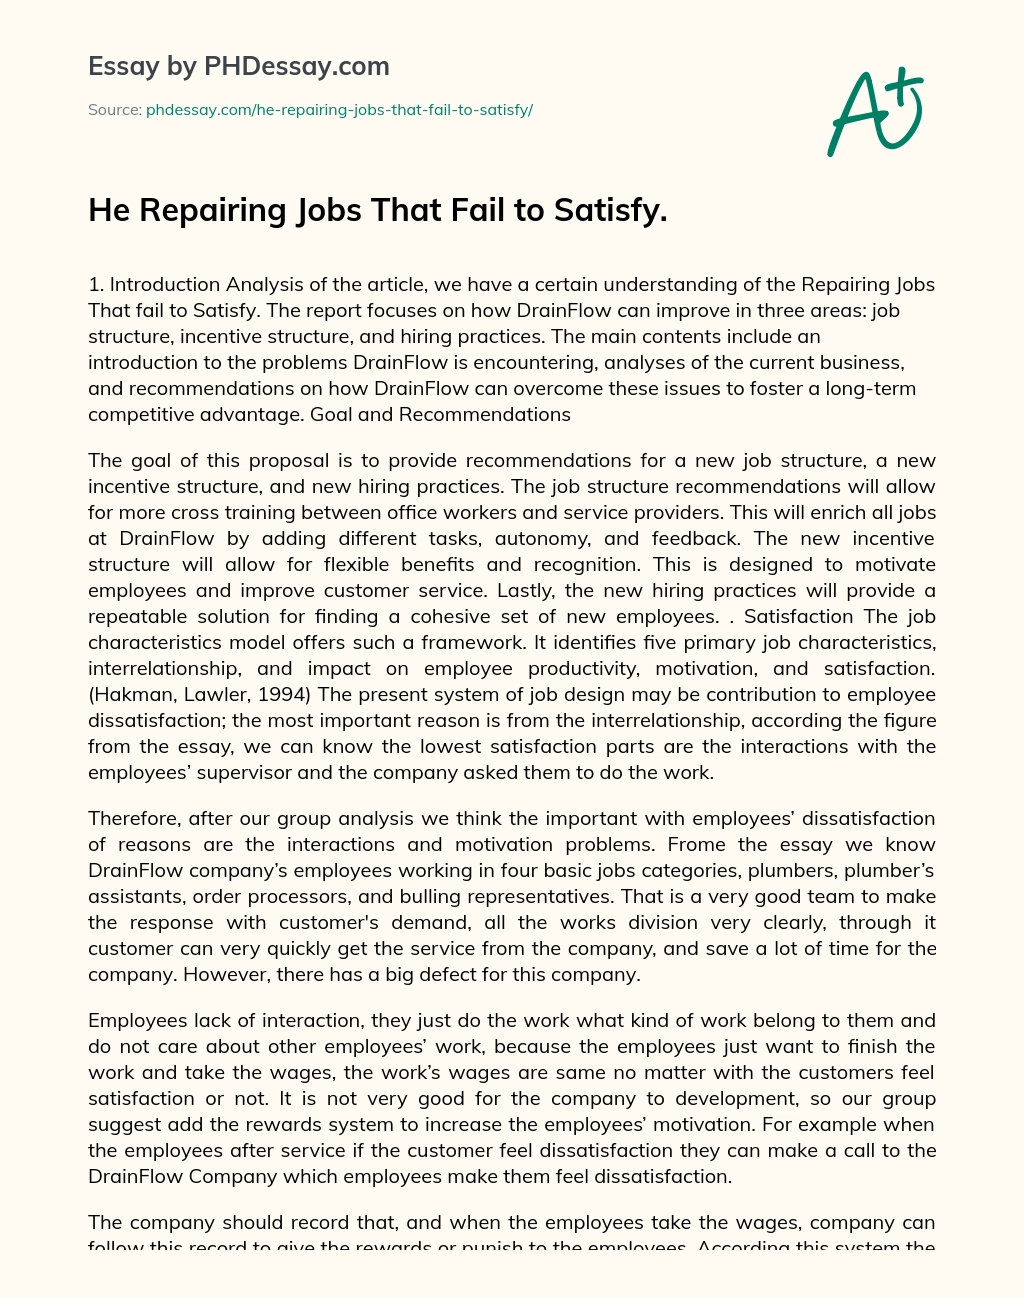 He Repairing Jobs That Fail to Satisfy. essay